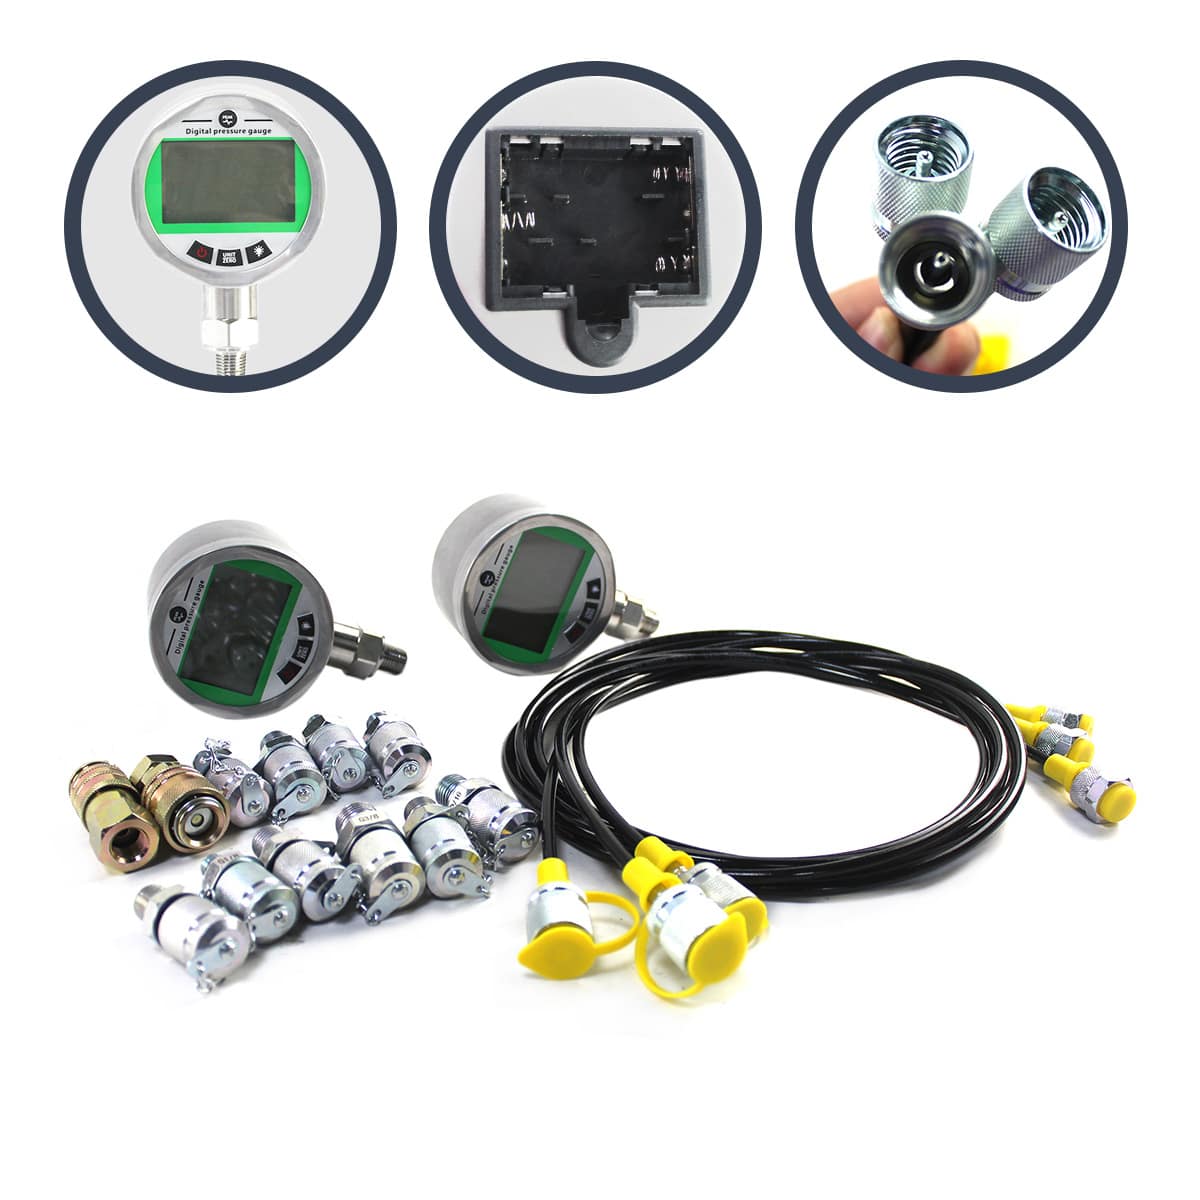 Hydraulic Digital Pressure Test Kit 2 Gauges 70MPA*2 - Sinocmp